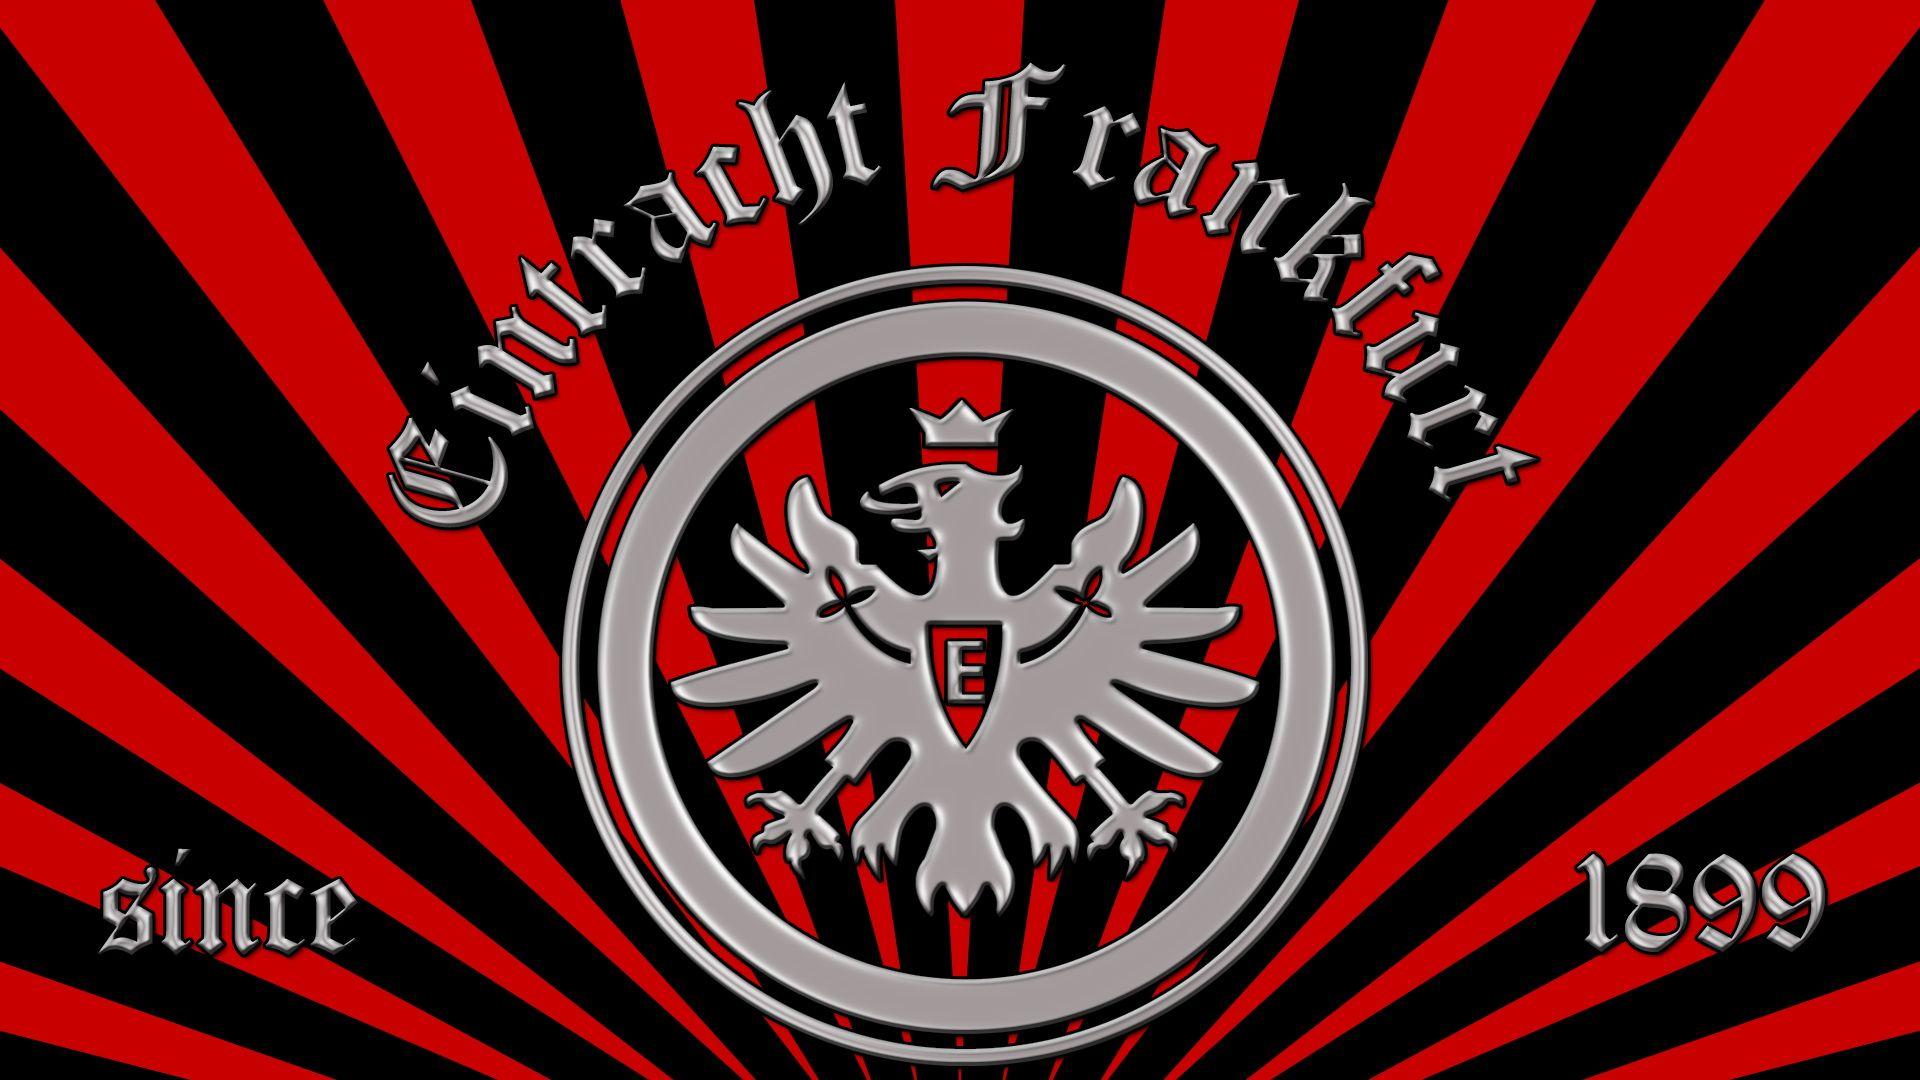 Eintracht F. since 1899 by RSFFM. Eintracht frankfurt logo